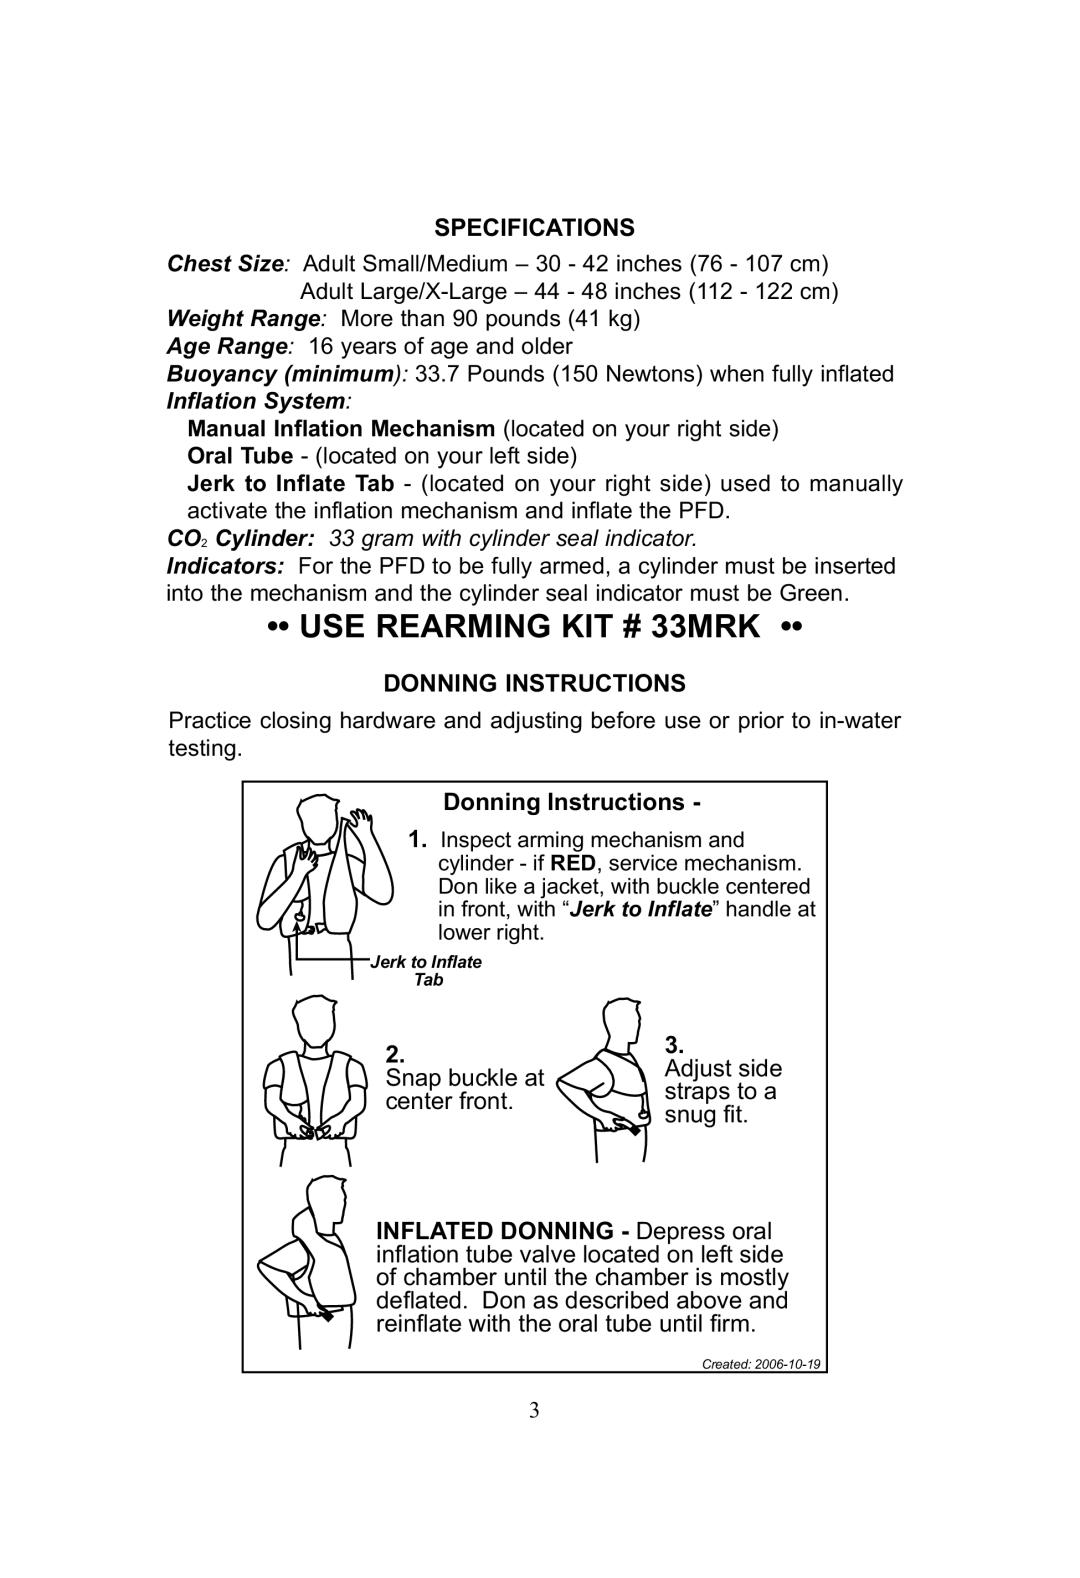 SOSpenders 33MSPT manual USE REARMING KIT # 33MRK, Specifications, Donning Instructions 